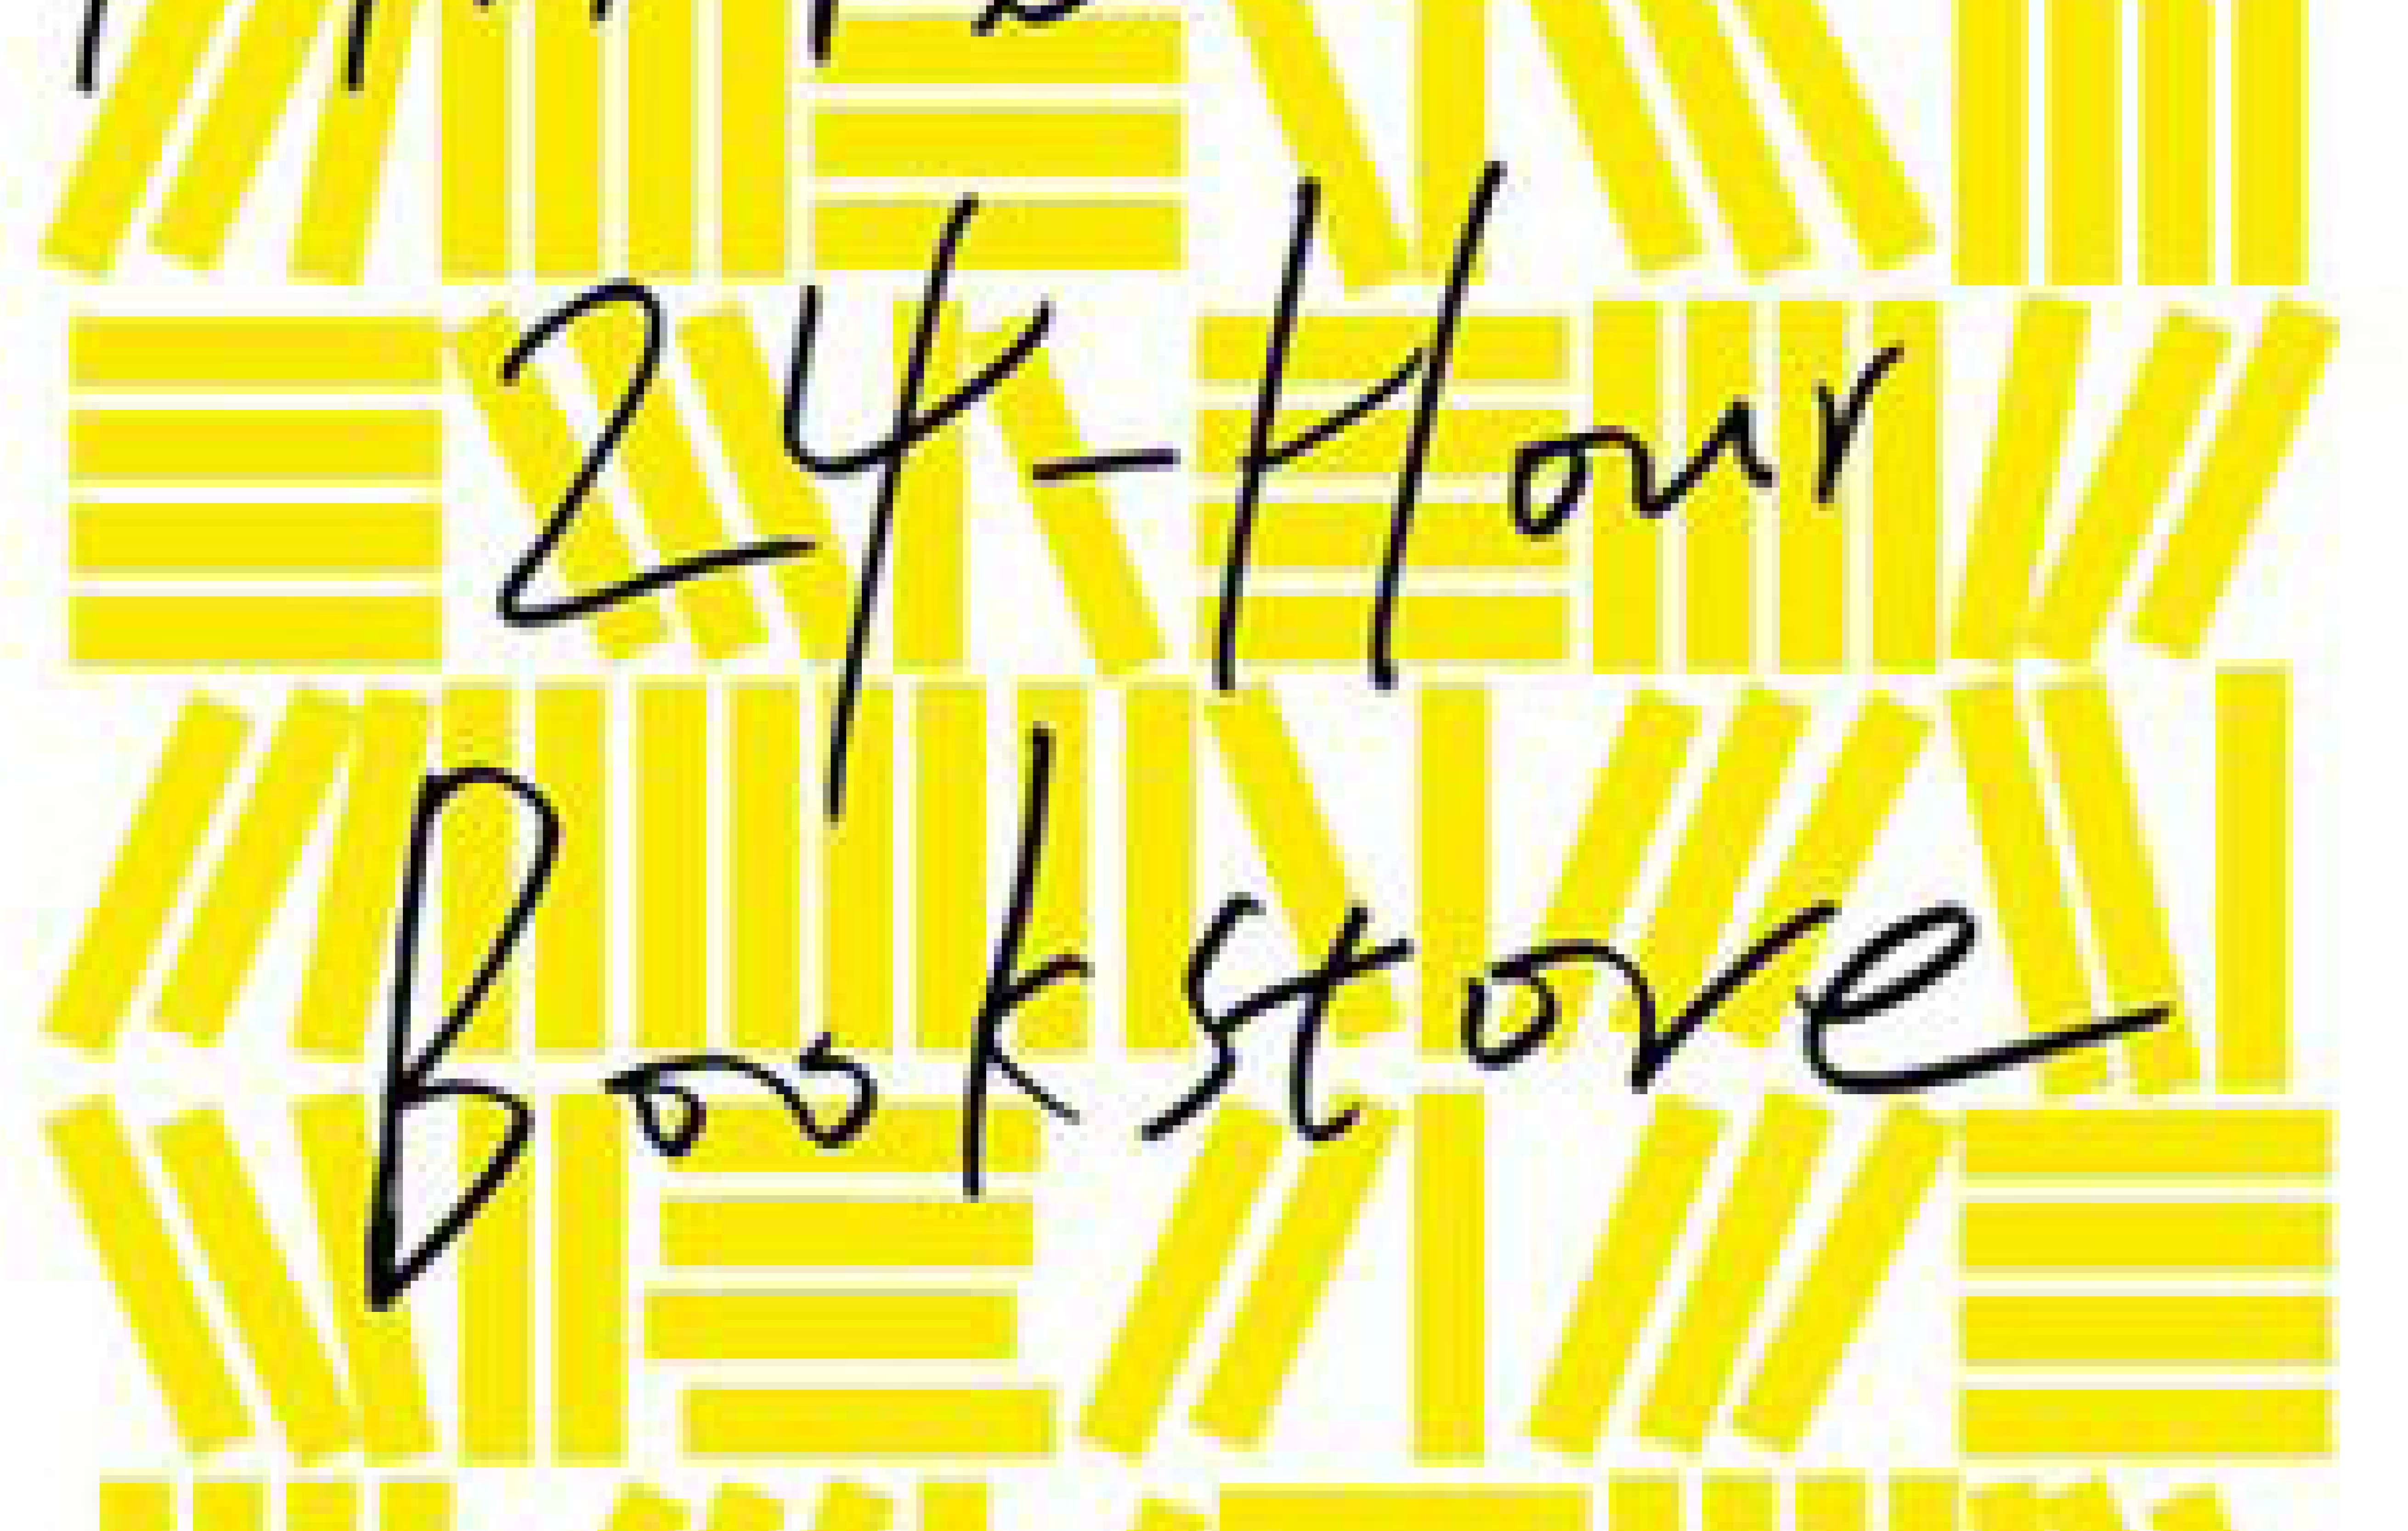 24 hour bookstore